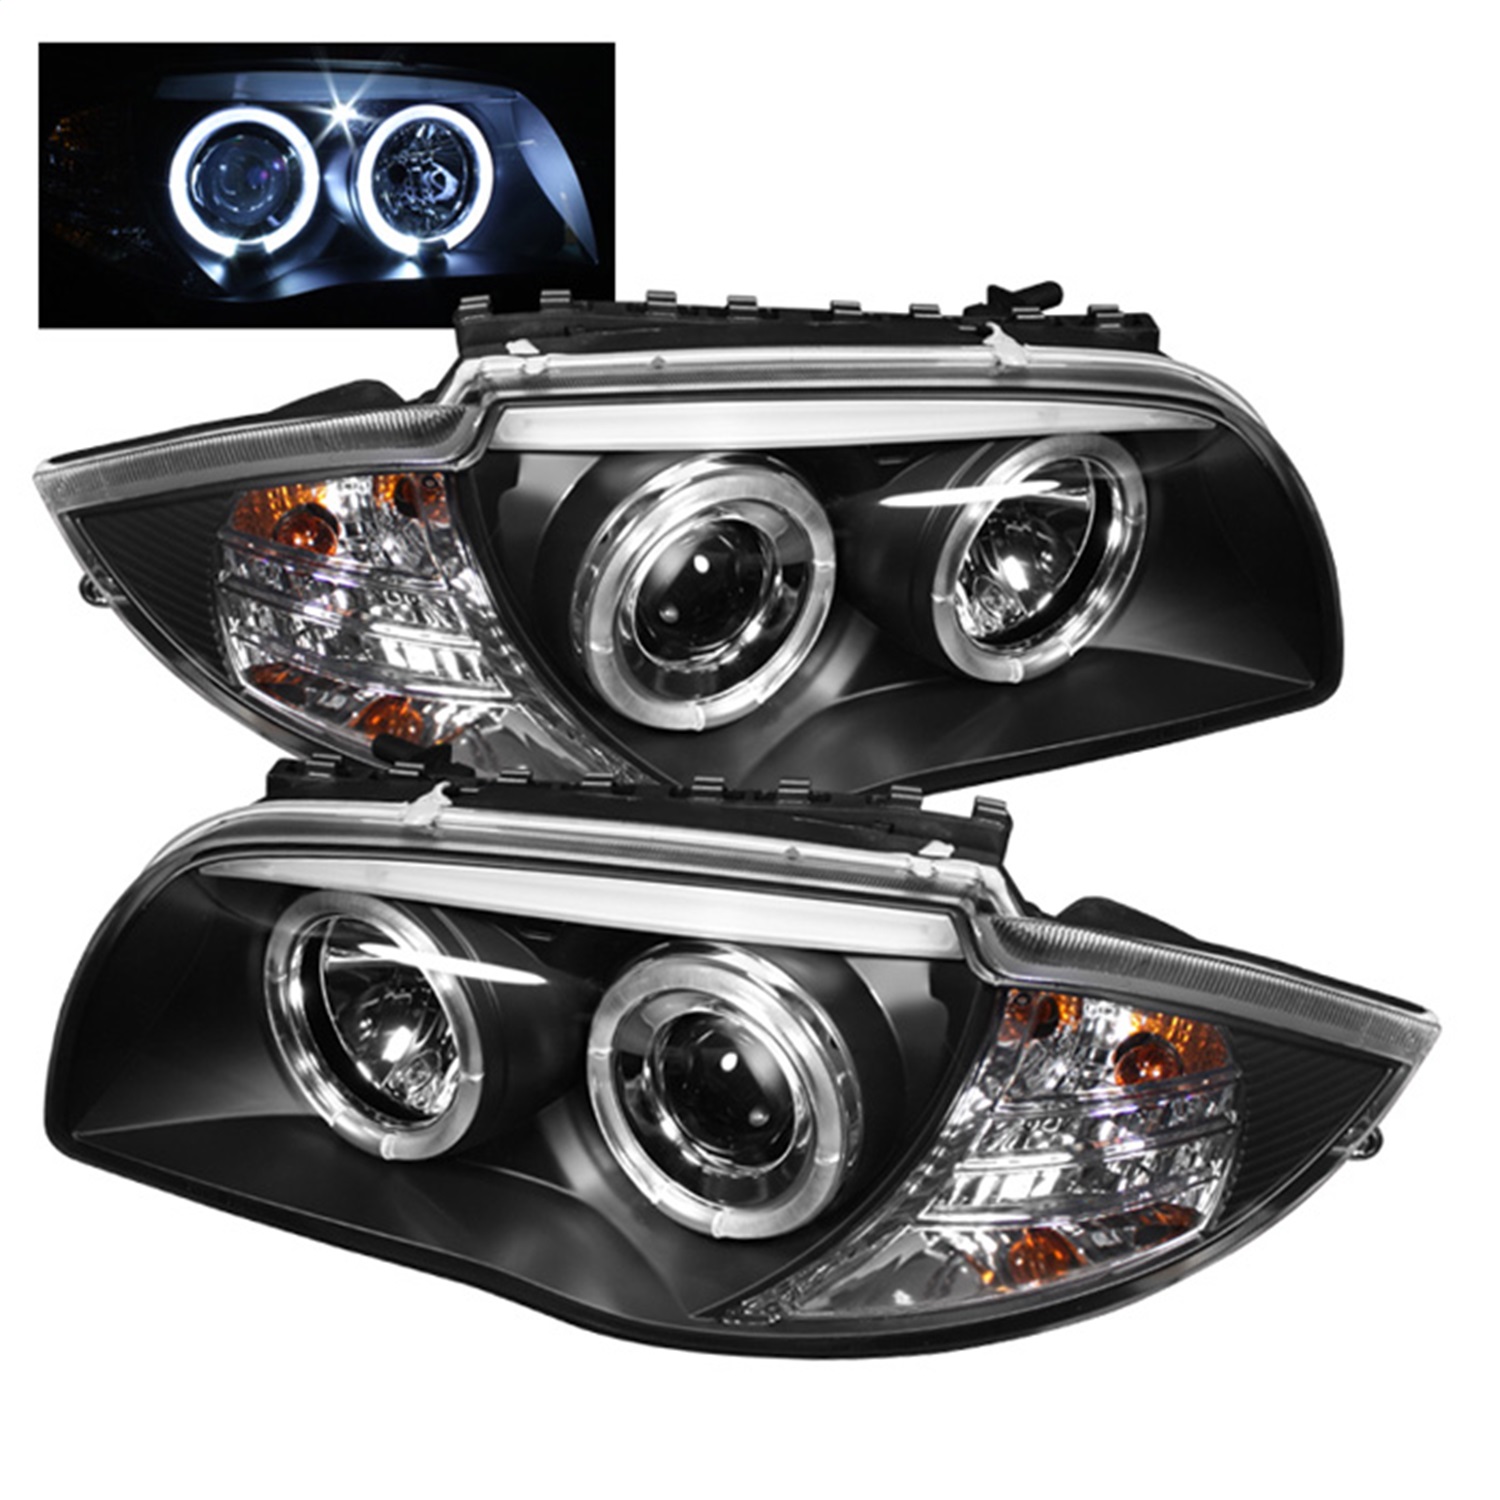 Spyder Auto 5008985 Halo Projector Headlights Fits 08-11 1 Series M 128i 135i